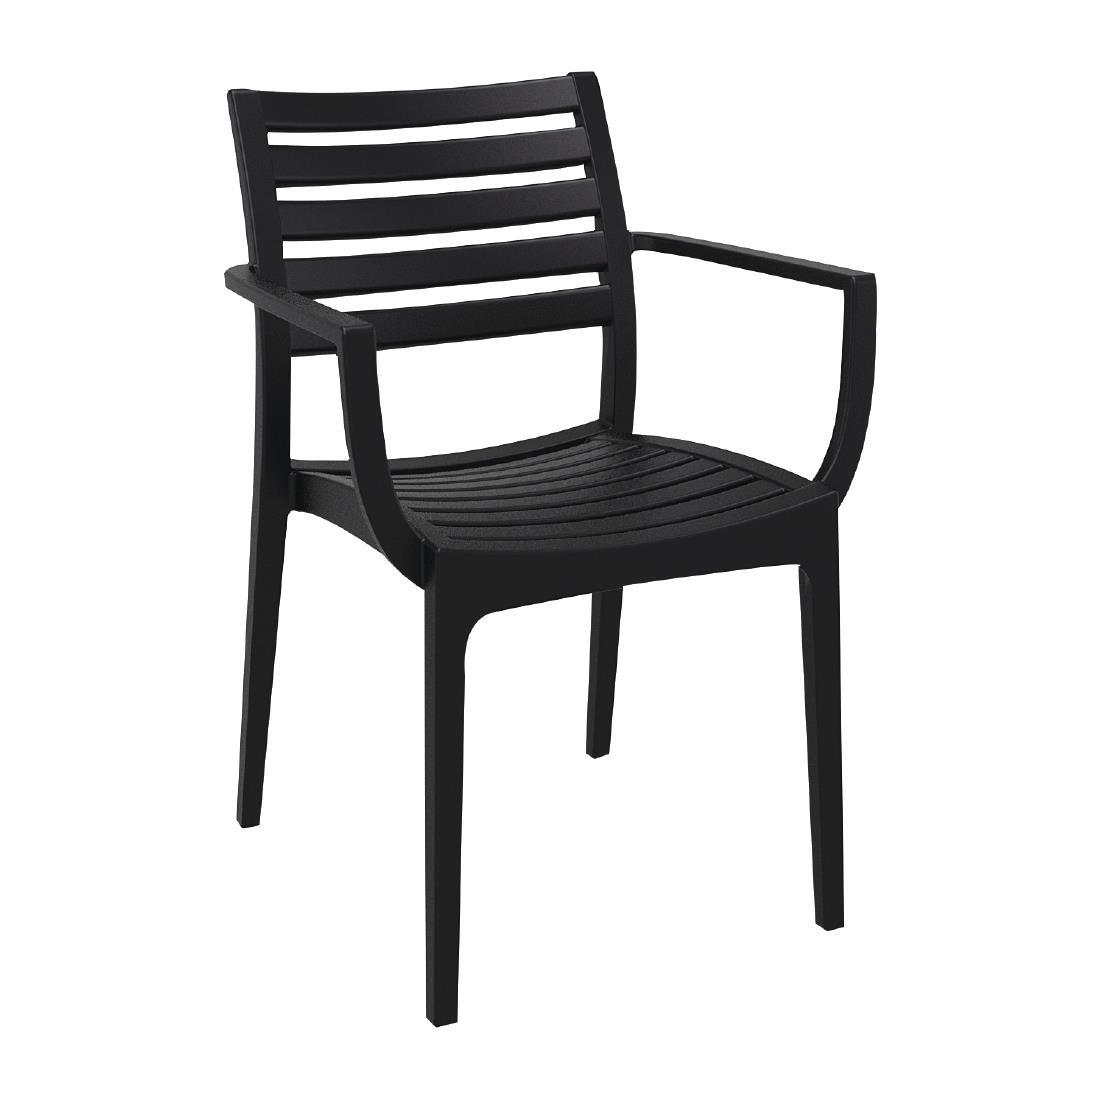 Artemis Arm Chair Black (Pack of 2) - FS445  - 1